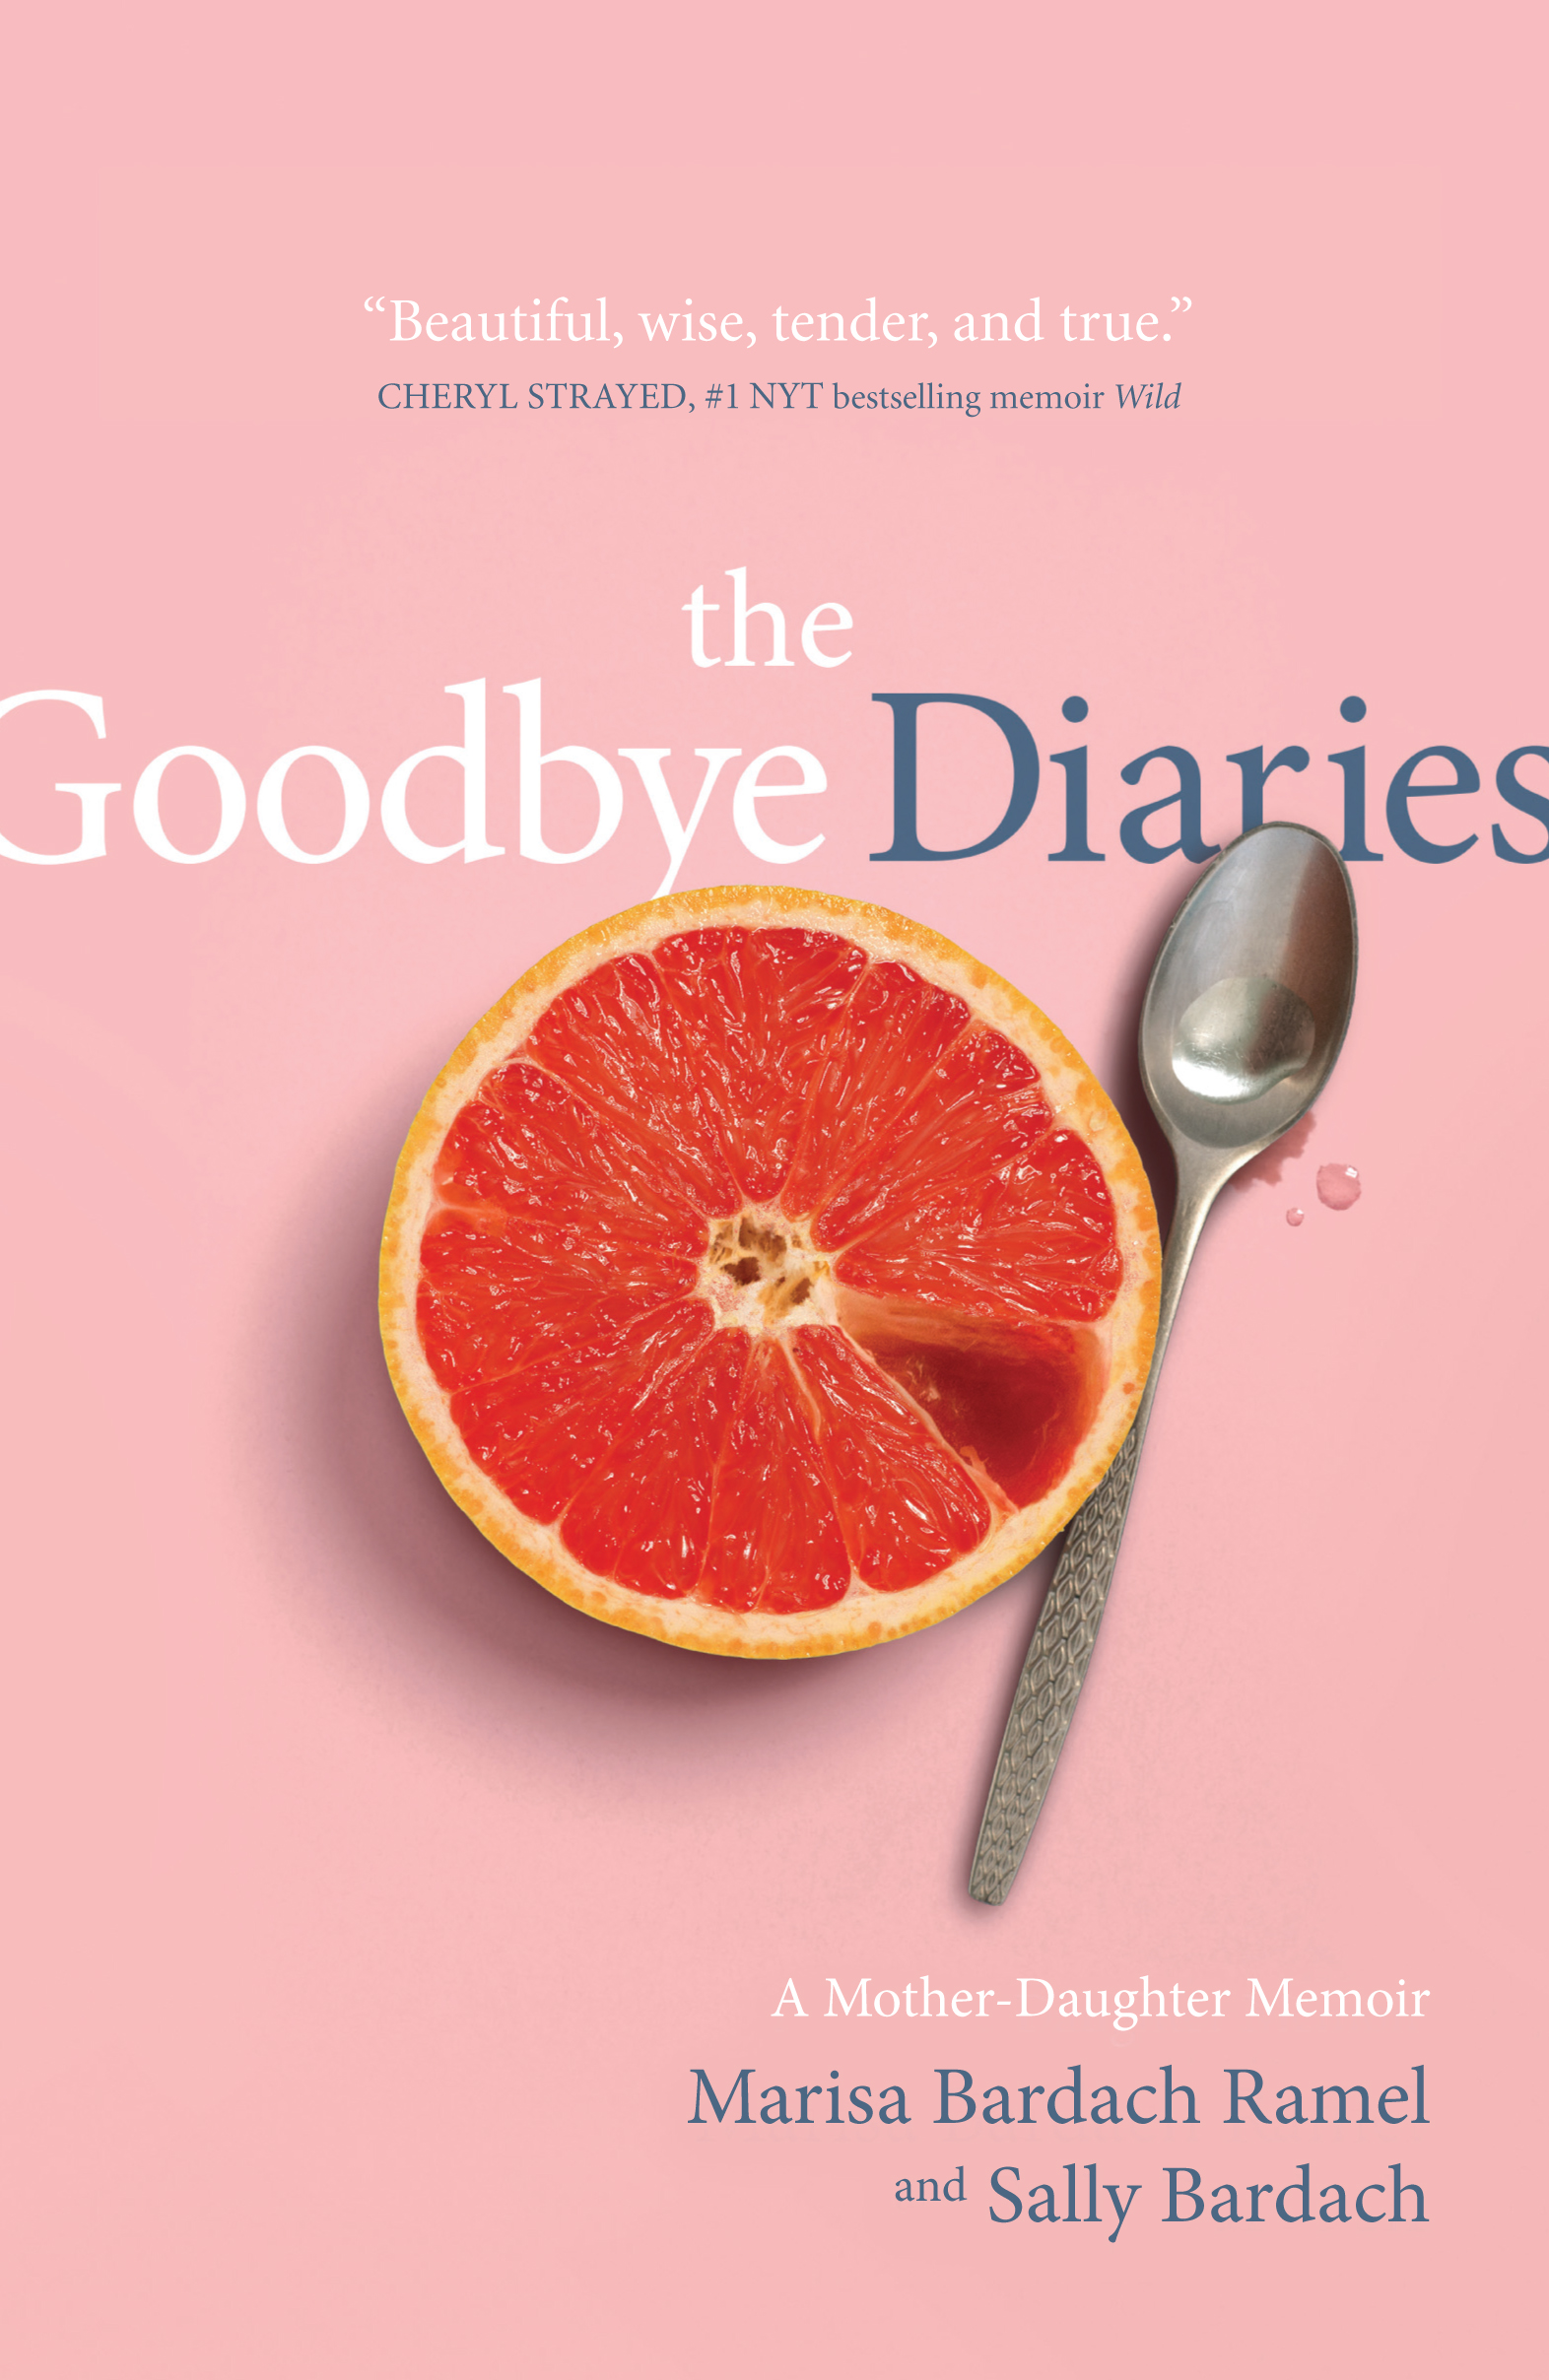 The Goodbye Diaries by Marisa Bardach Ramel and Sally Bardach